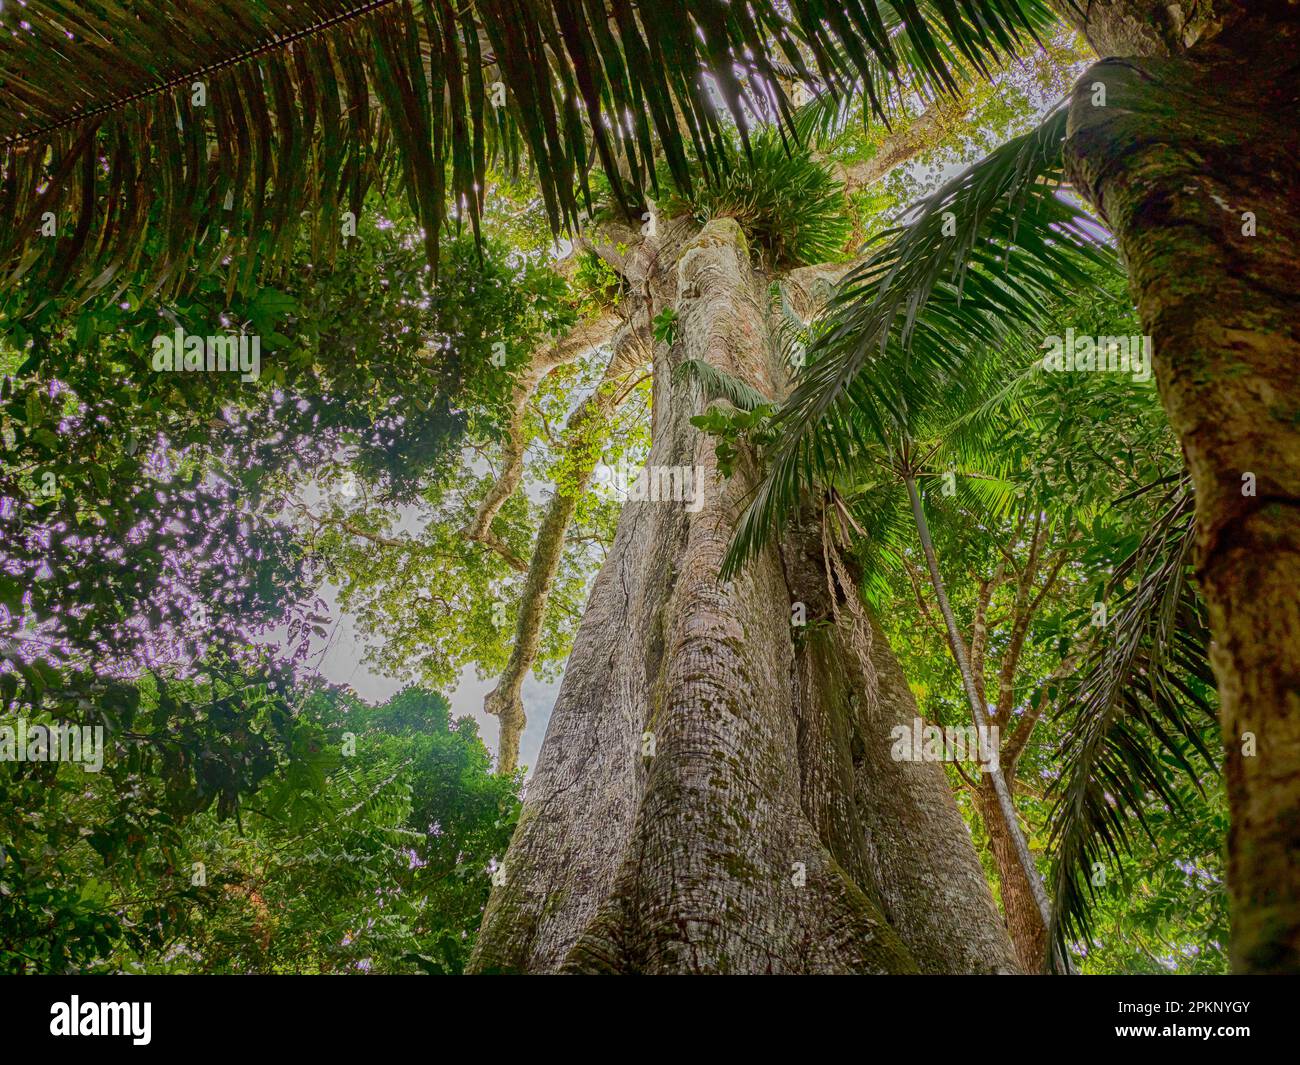 Big ceiba, kapok tree on the bank of the Javari River. Ceiba pentandra. Amazonia, border of Brazilia and Peru, South America Stock Photo